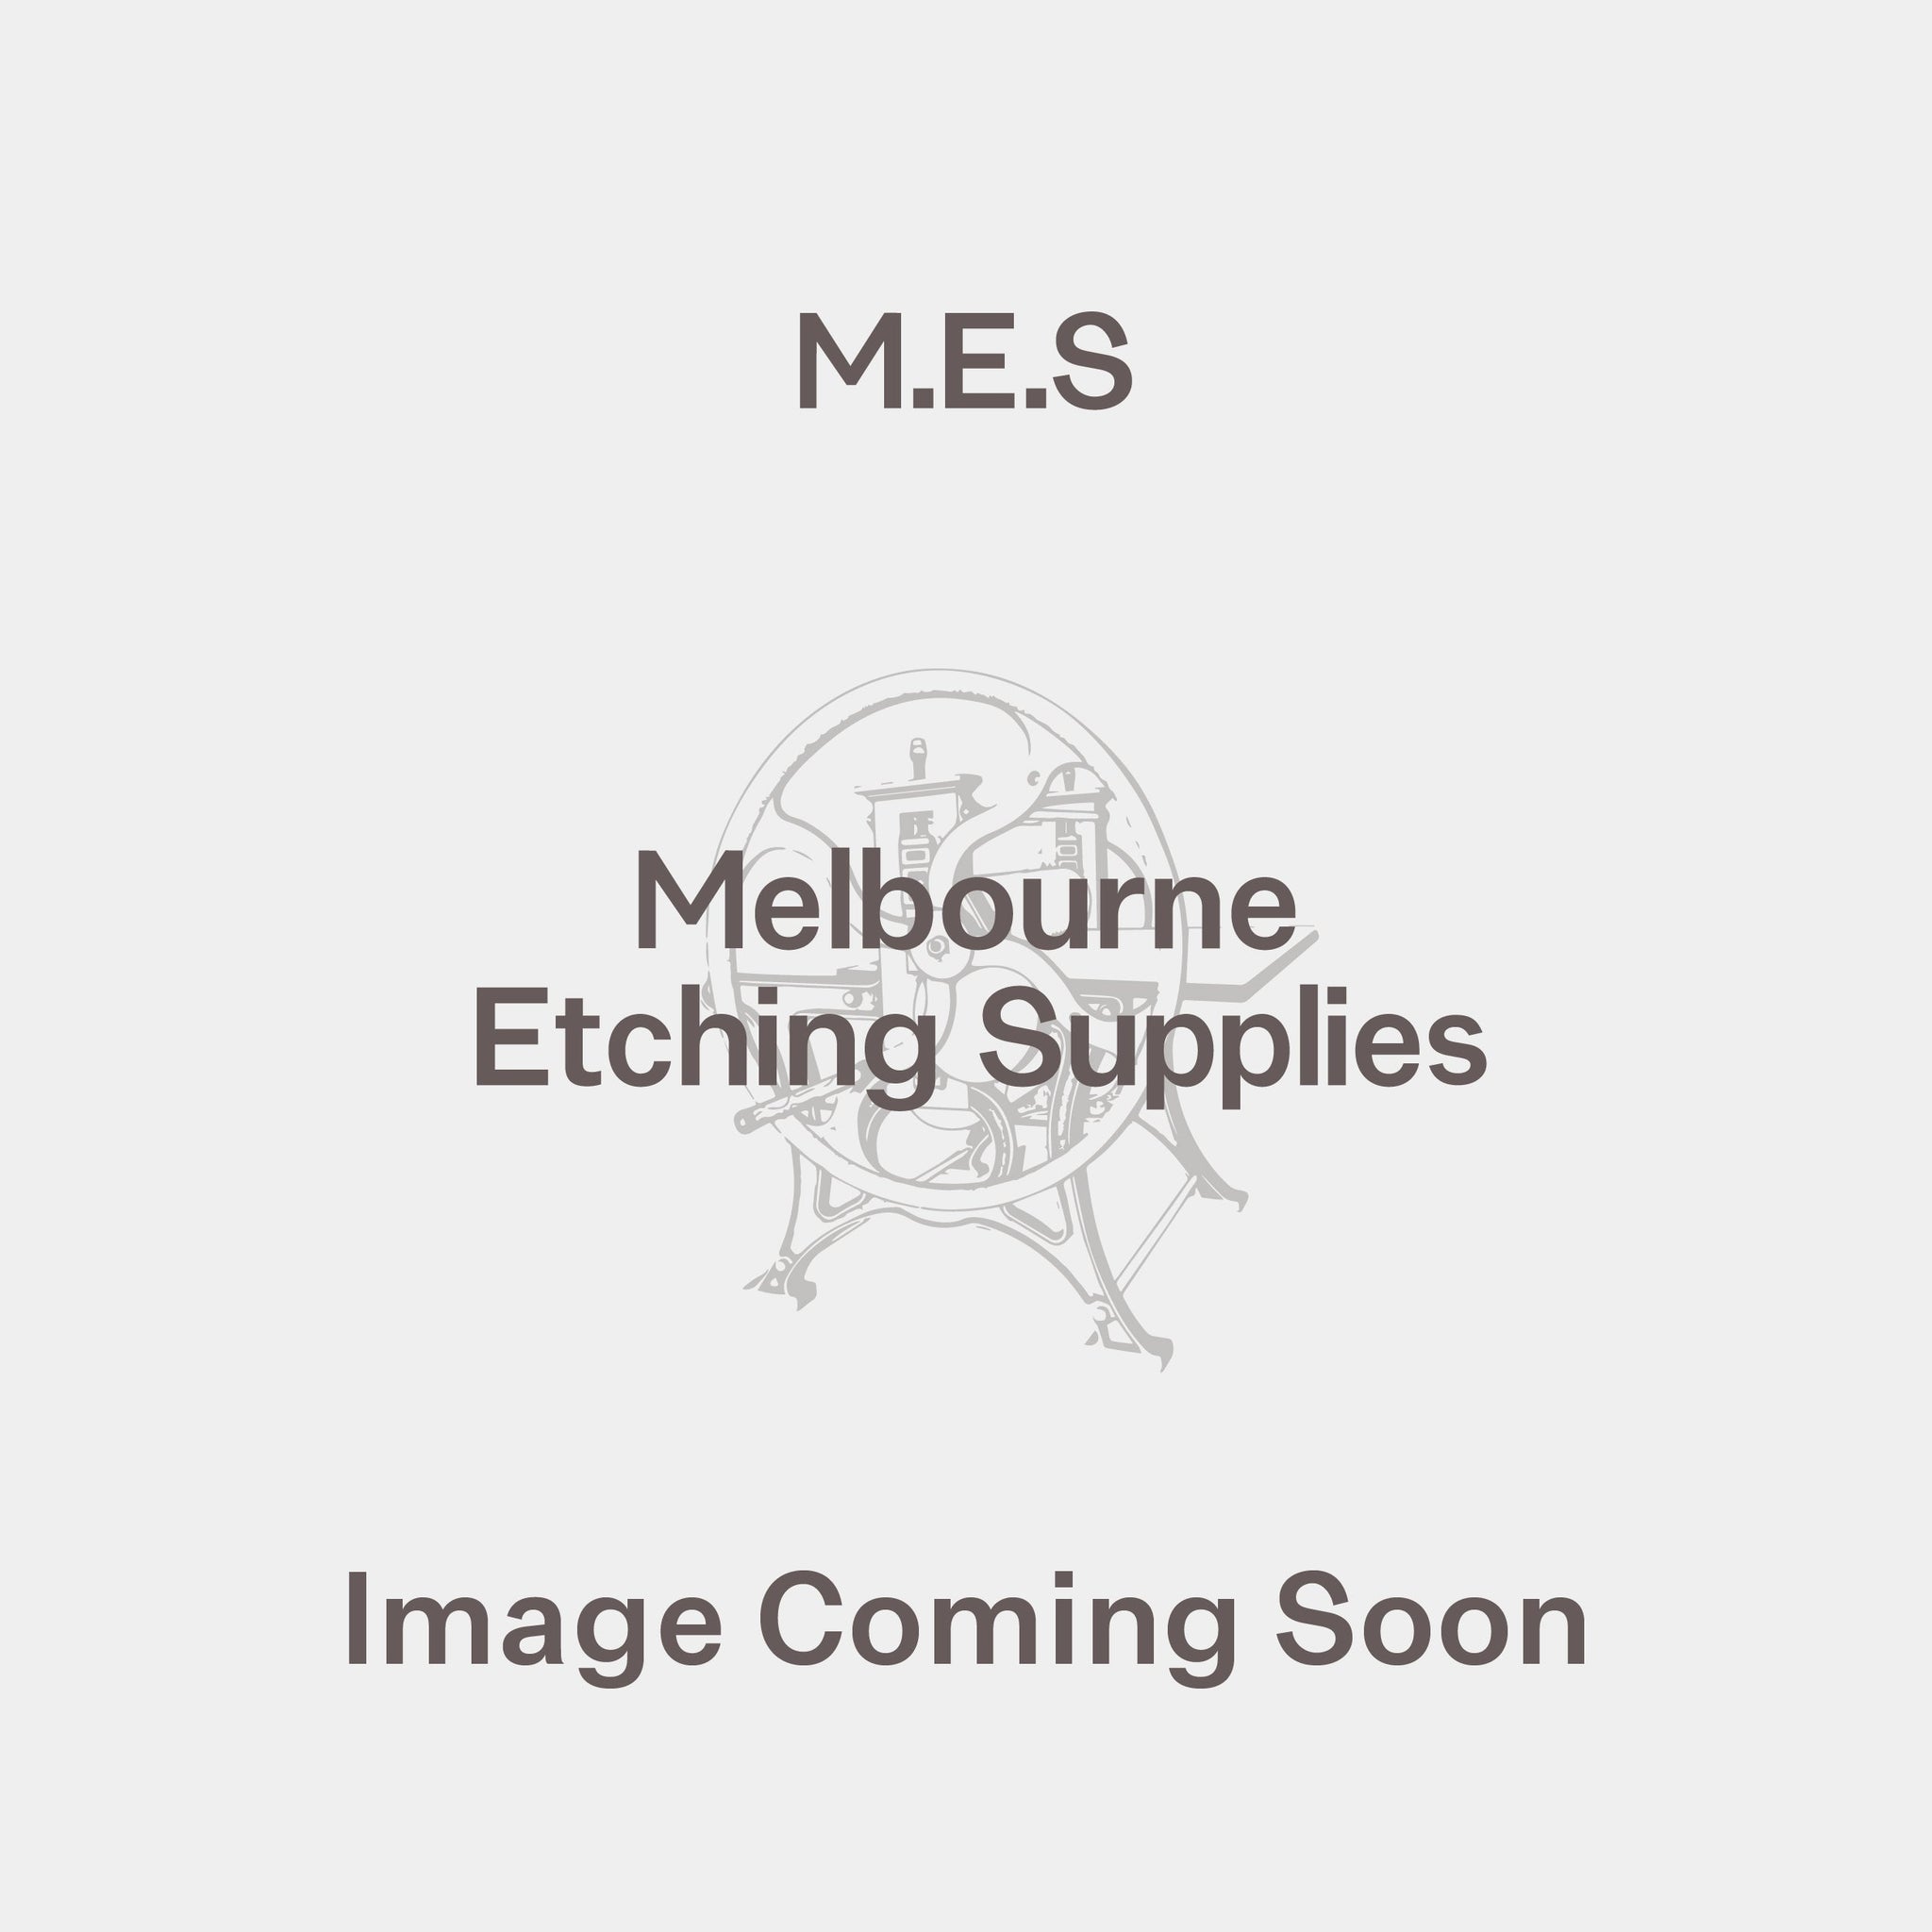 Dutch Aquatint 300gsm - Melbourne Etching Supplies